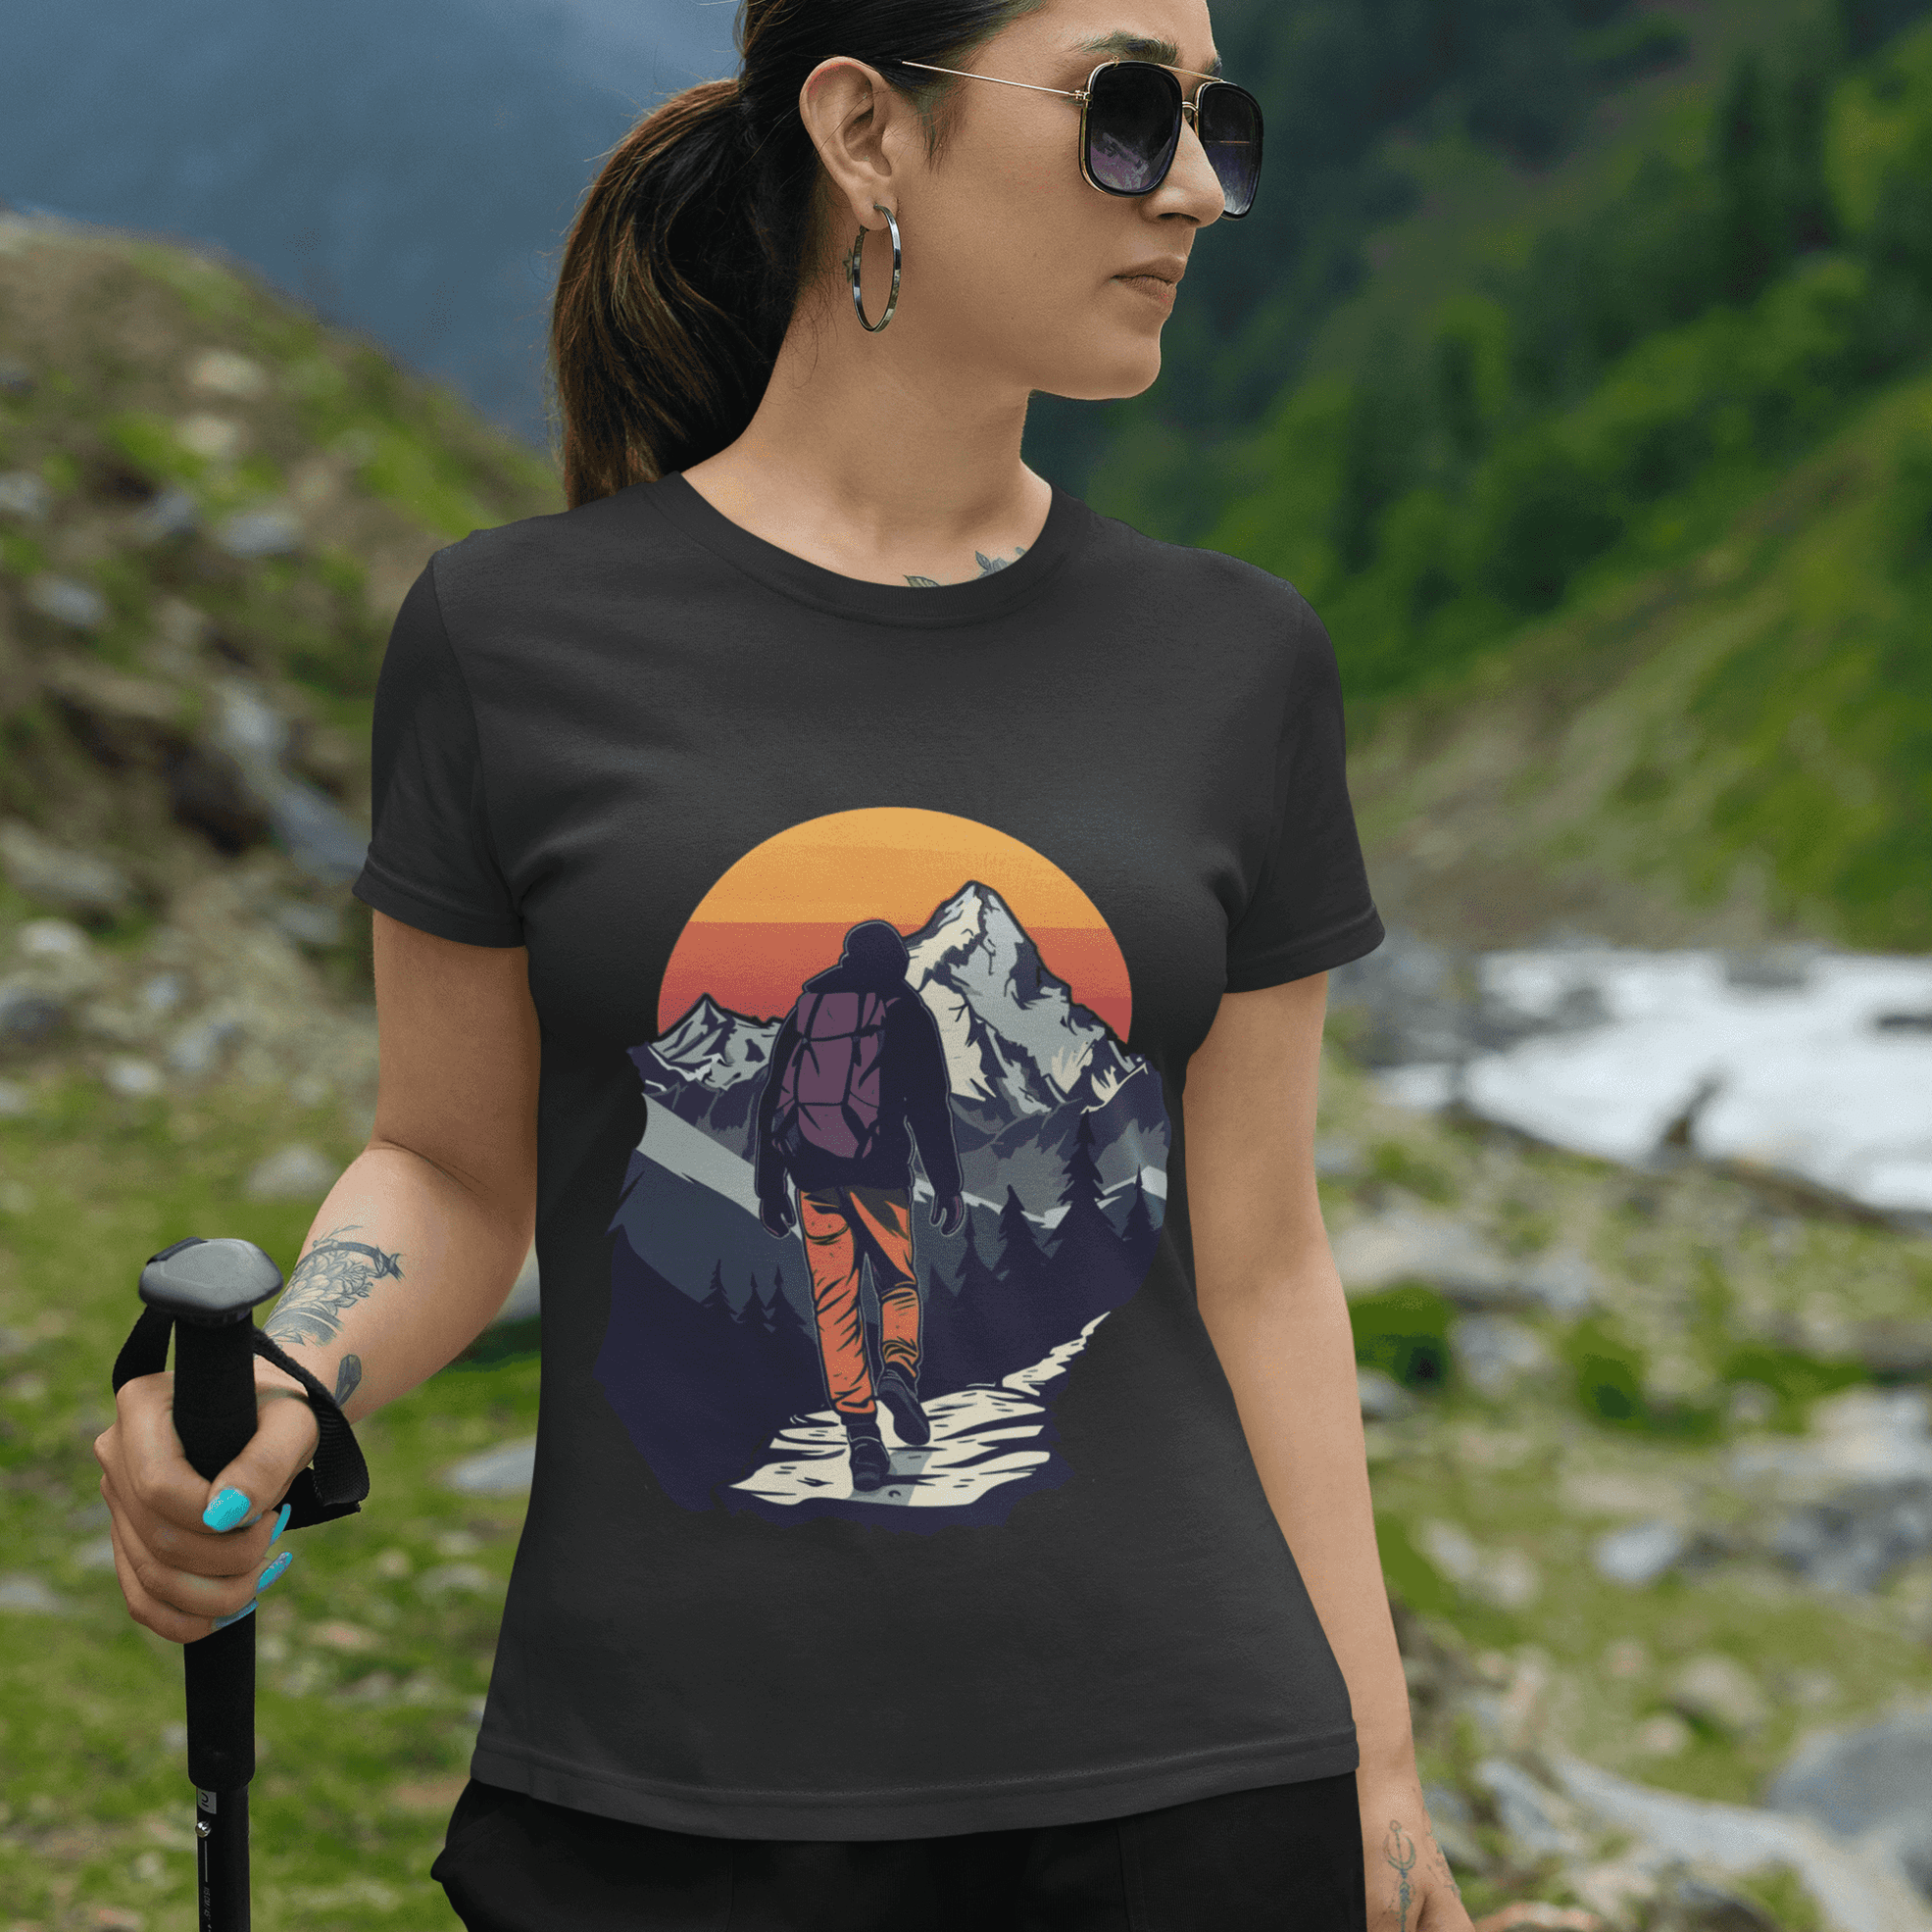 Trailblazer Women's Hiking Adventure T-Shirt - Wander, Explore, Conquer